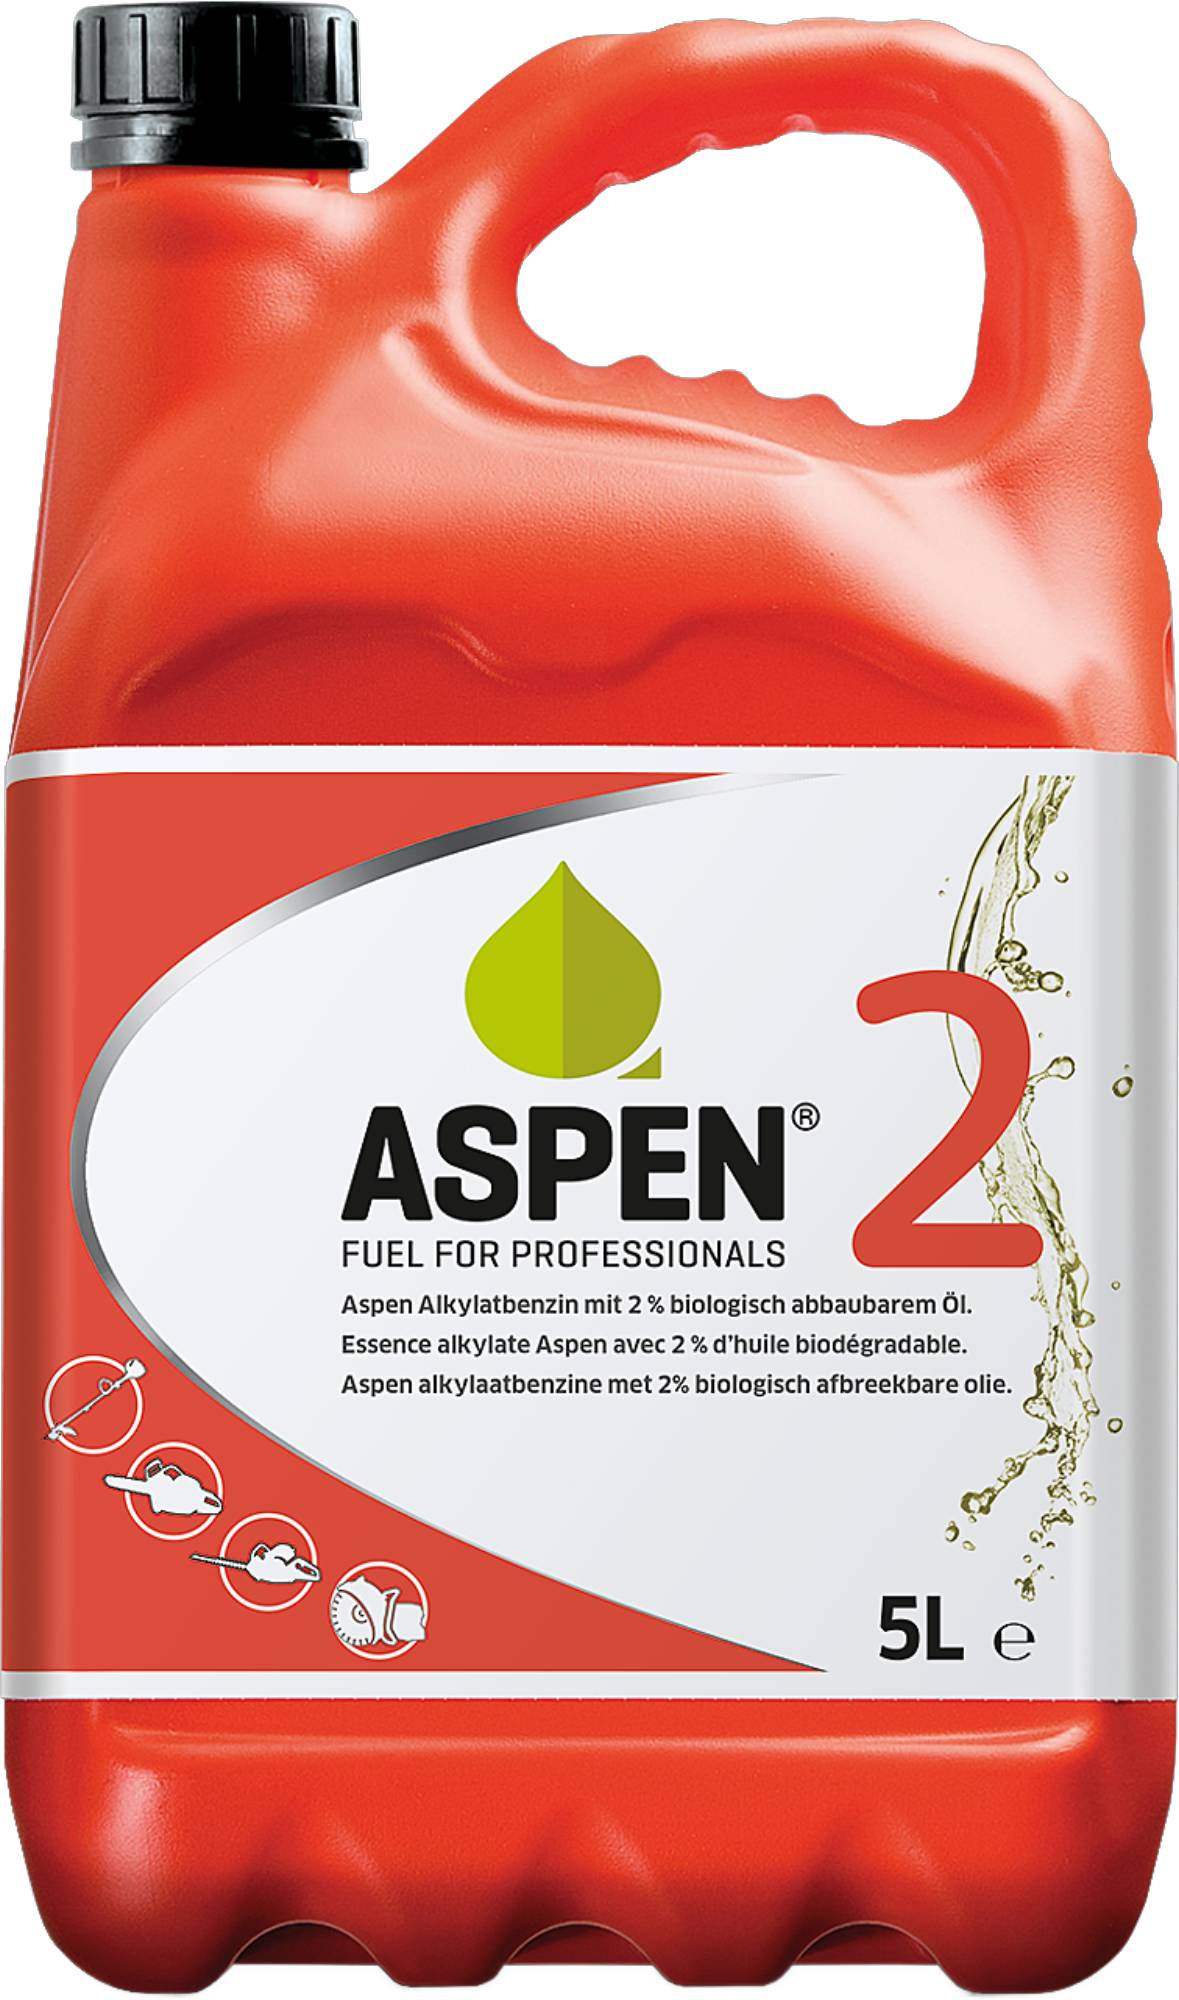 Aspen 2T. 5ltr., Motorsägen, Gartentechnik, Online-Shop